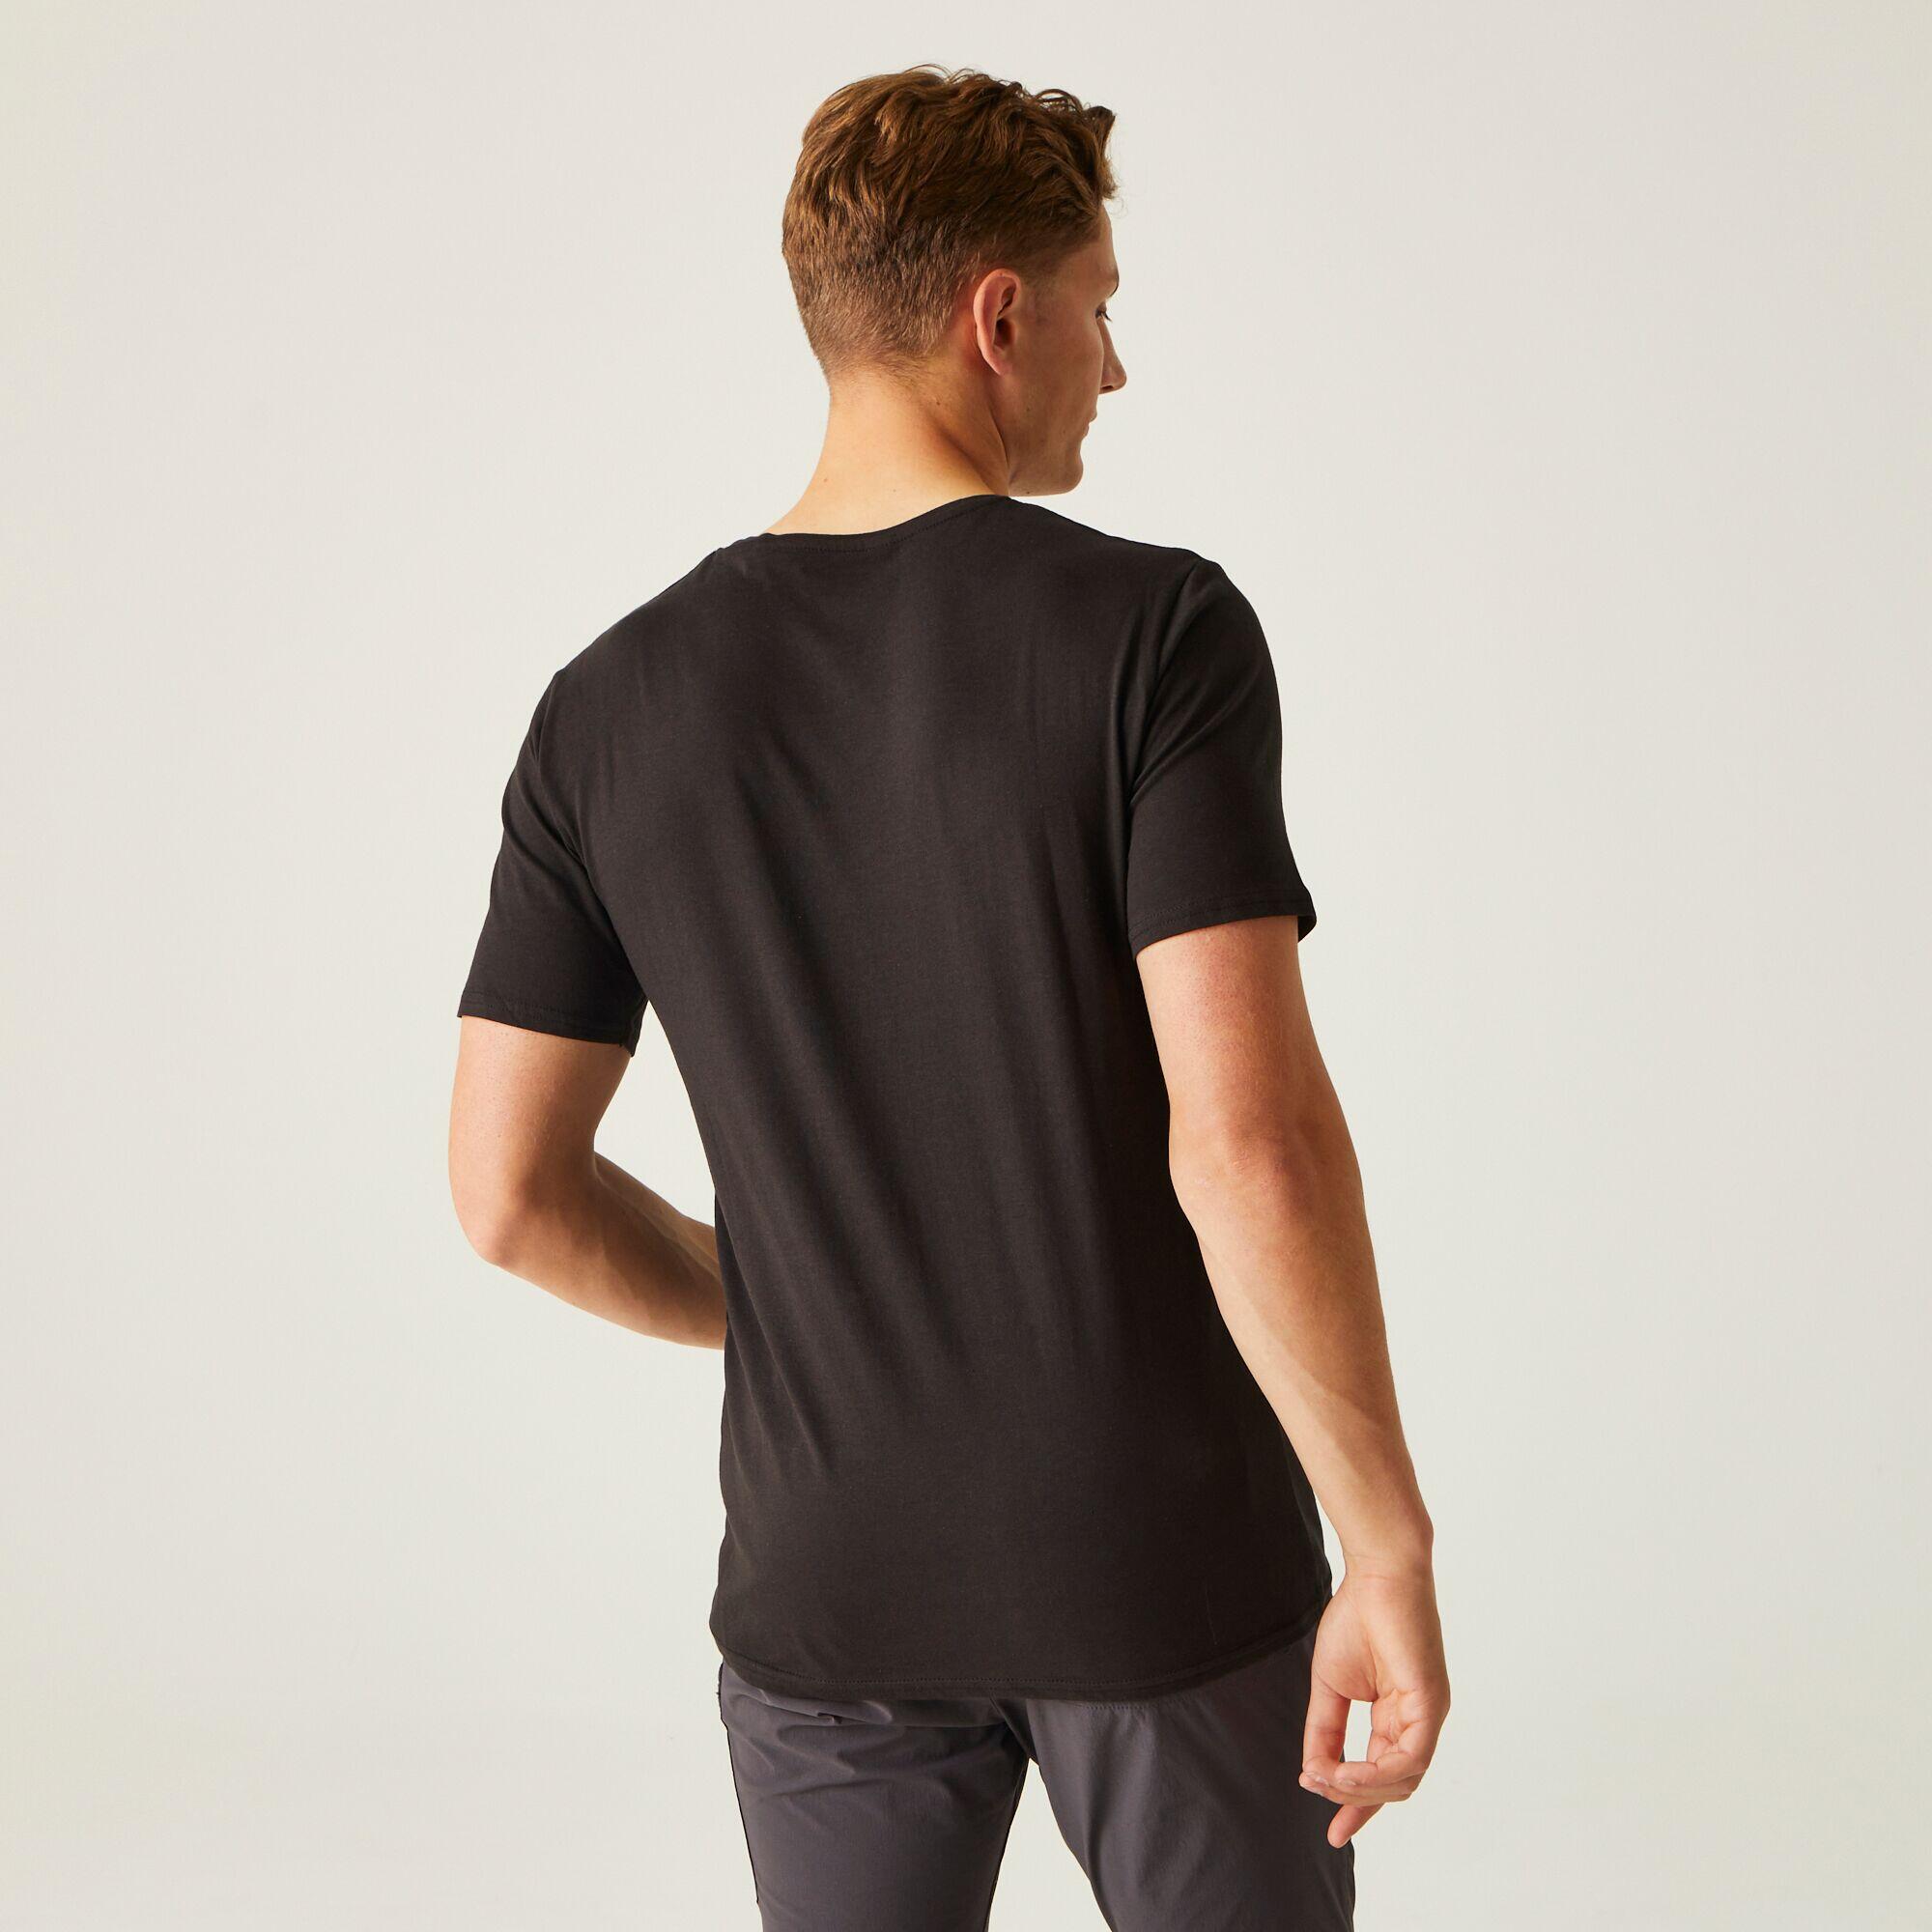 Tait Men's Walking Short Sleeve T-Shirt - Black 2/5